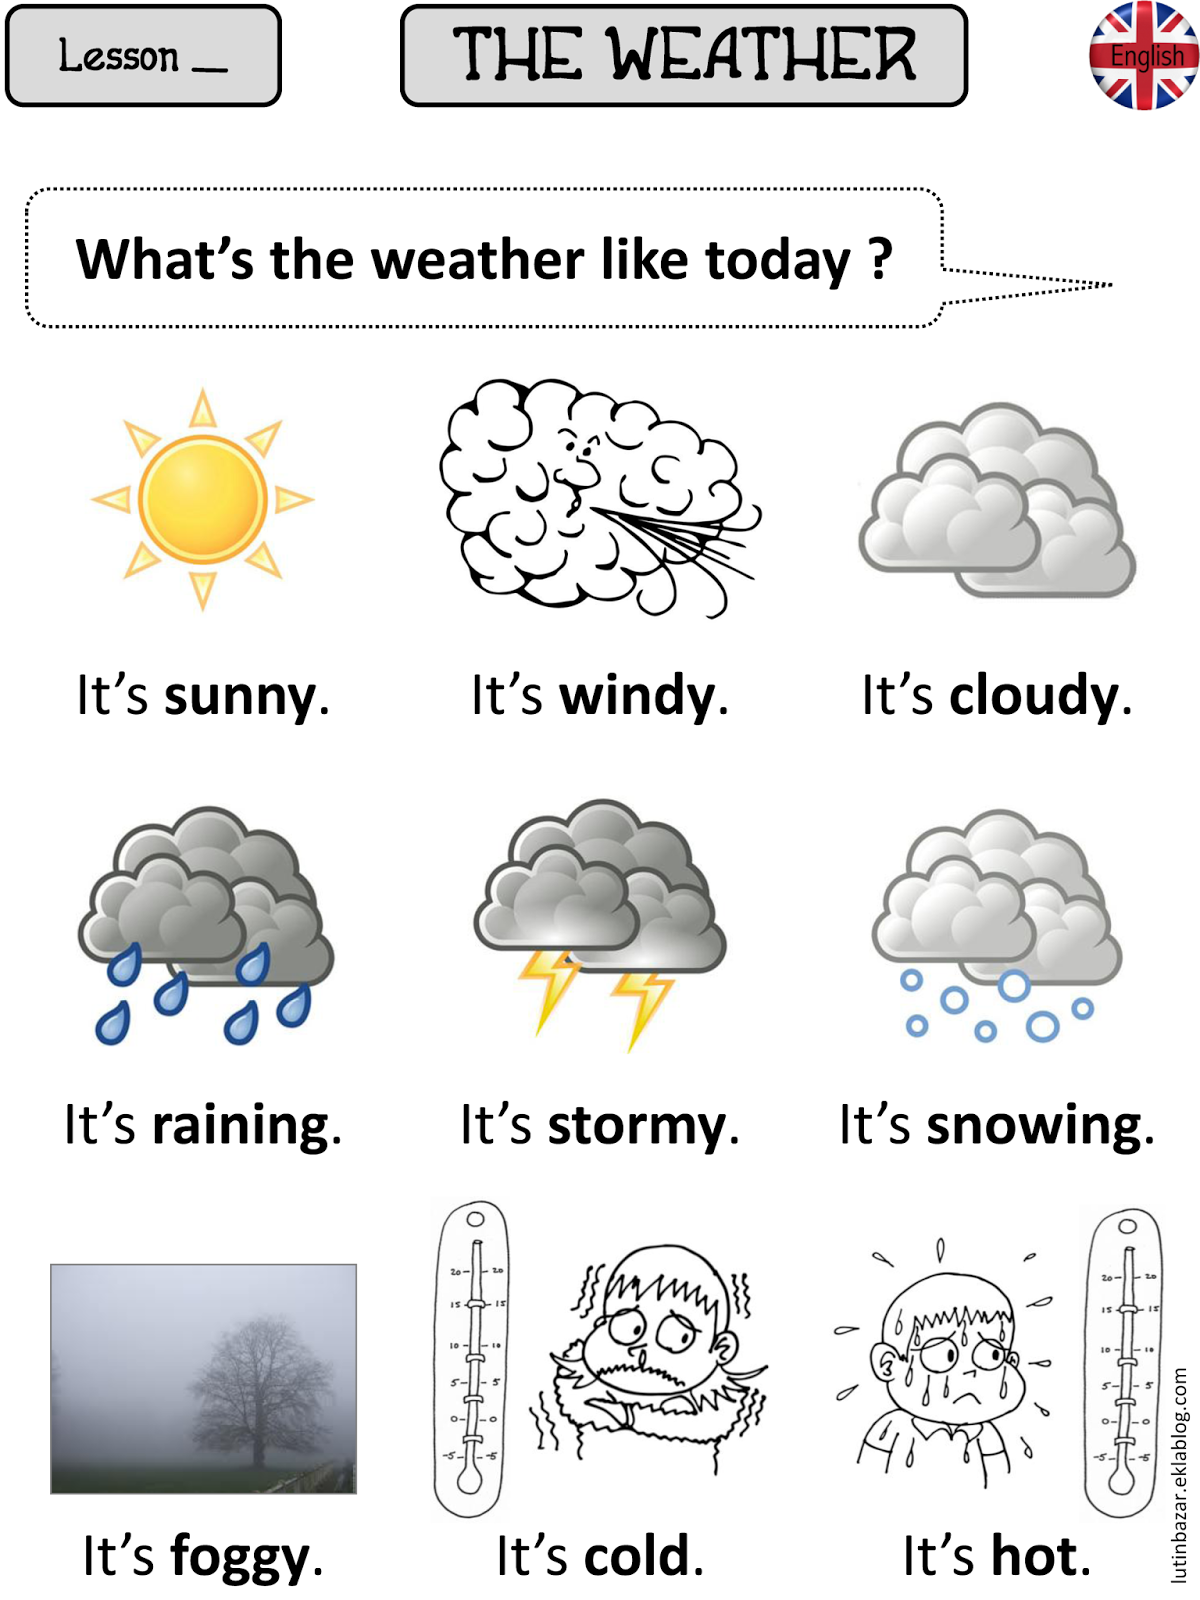 Weather conversations